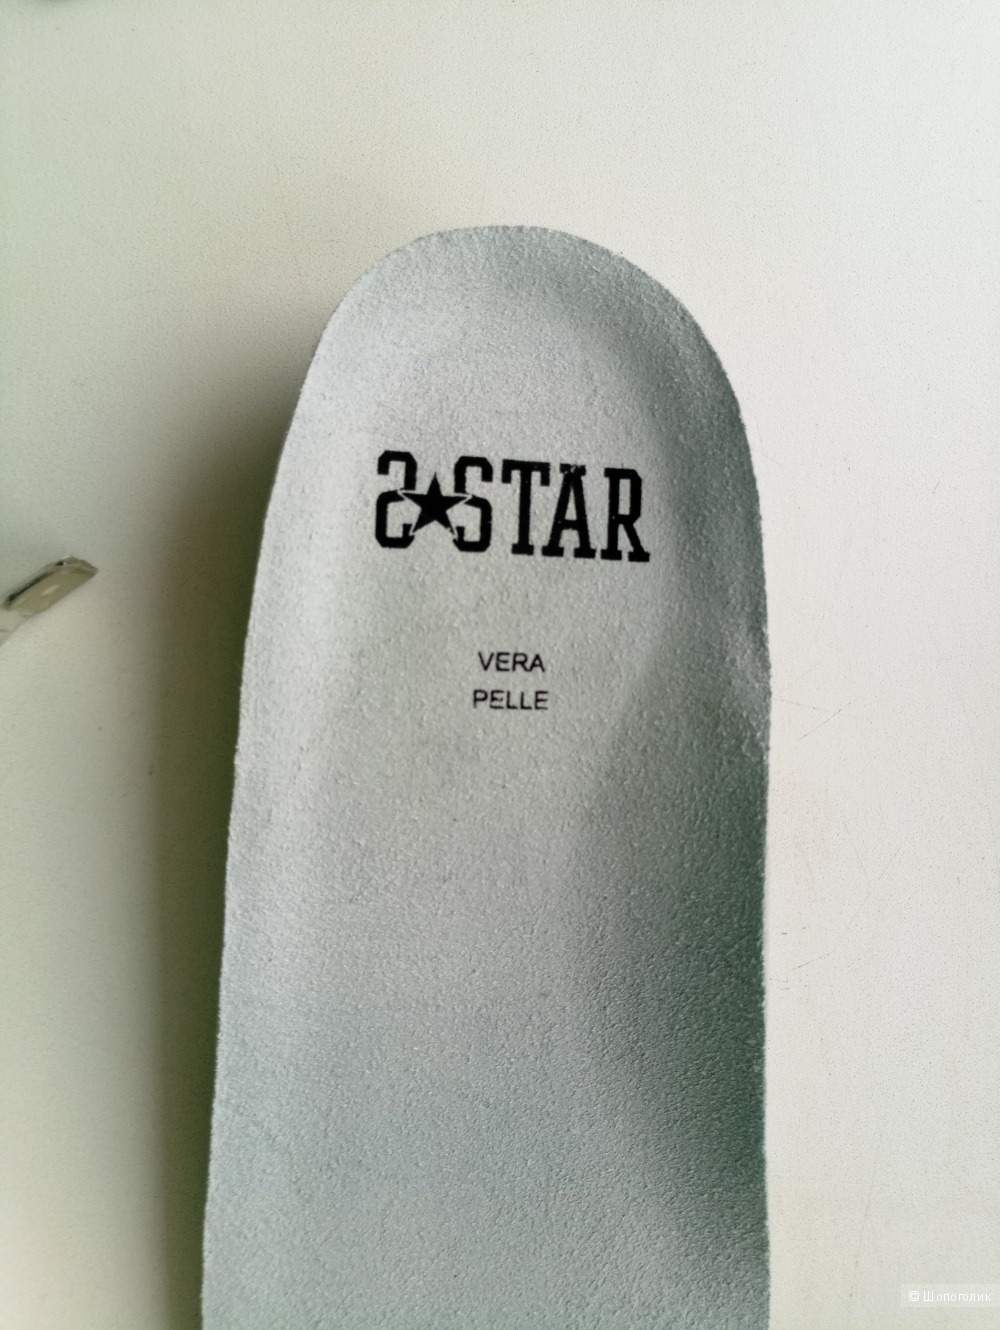 Кроссовки 2Star  размер 38-39